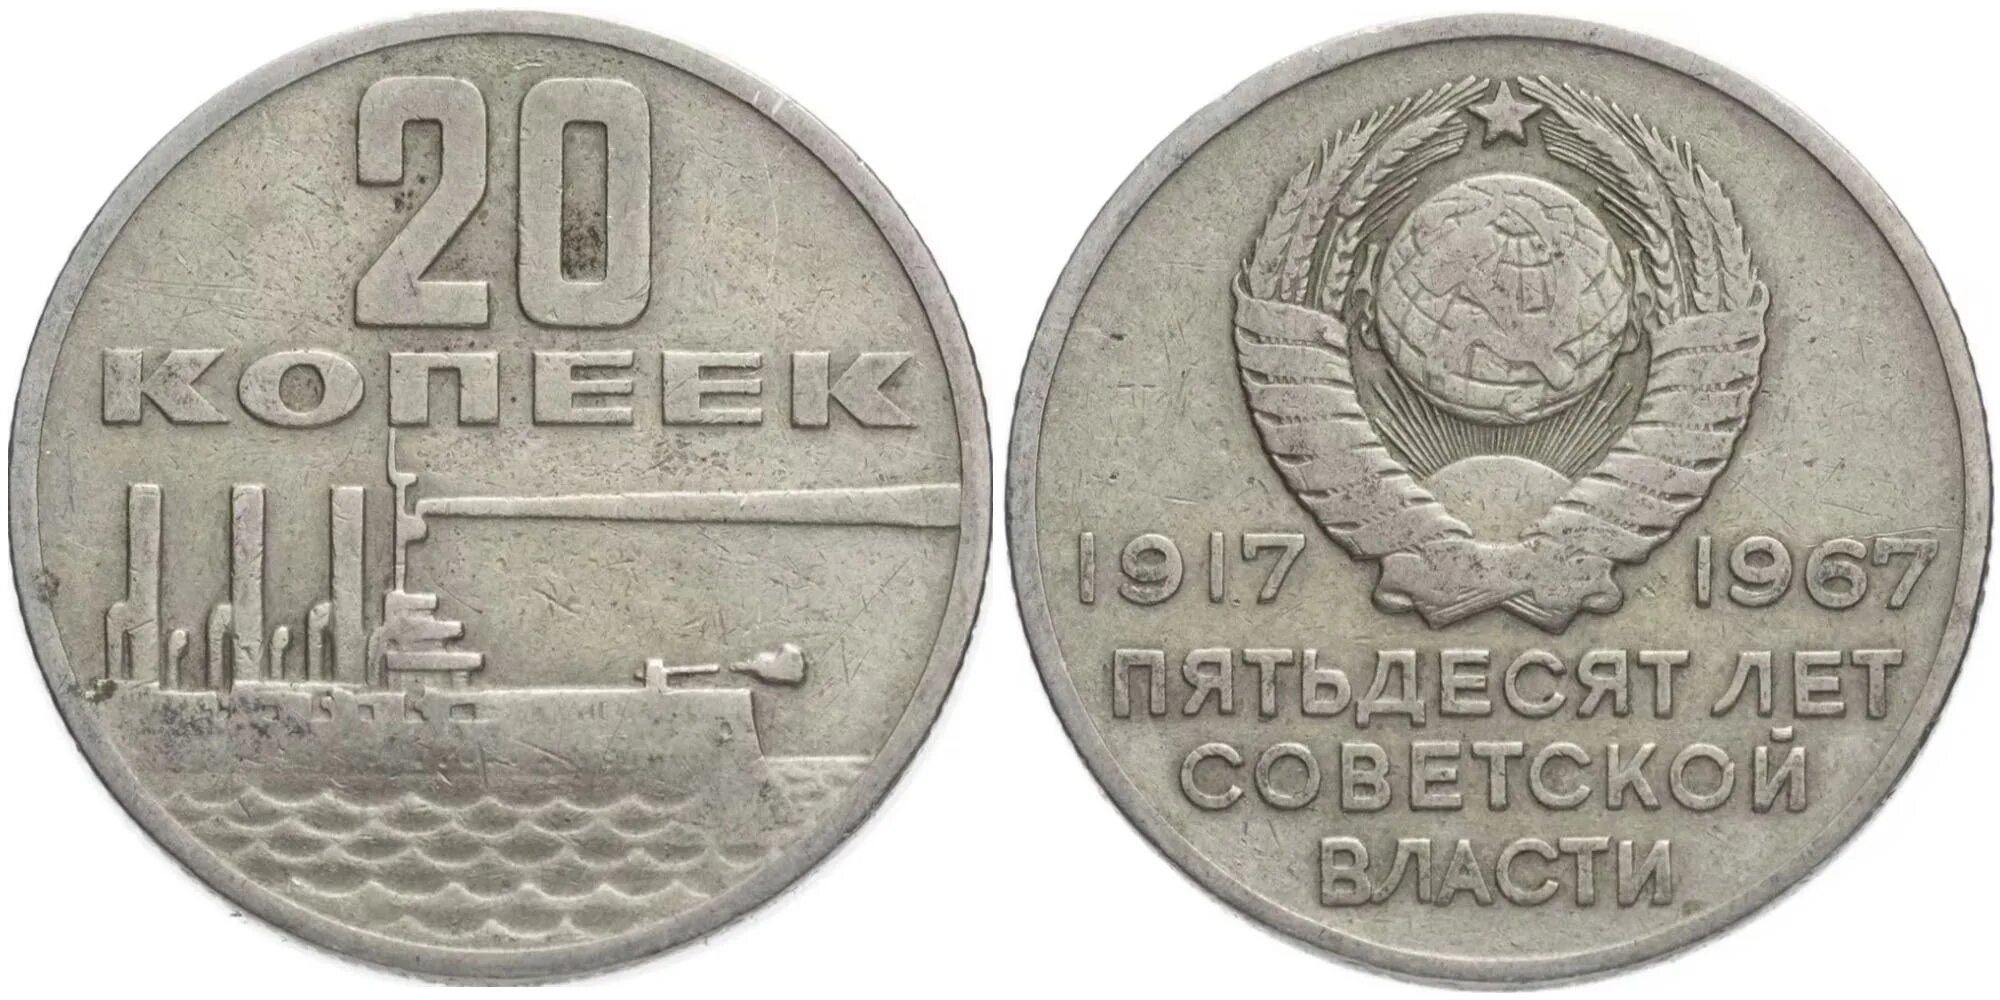 Советская монета 1917 1967. Монеты СССР 1917-1967. Монета 20 копеек 1917.